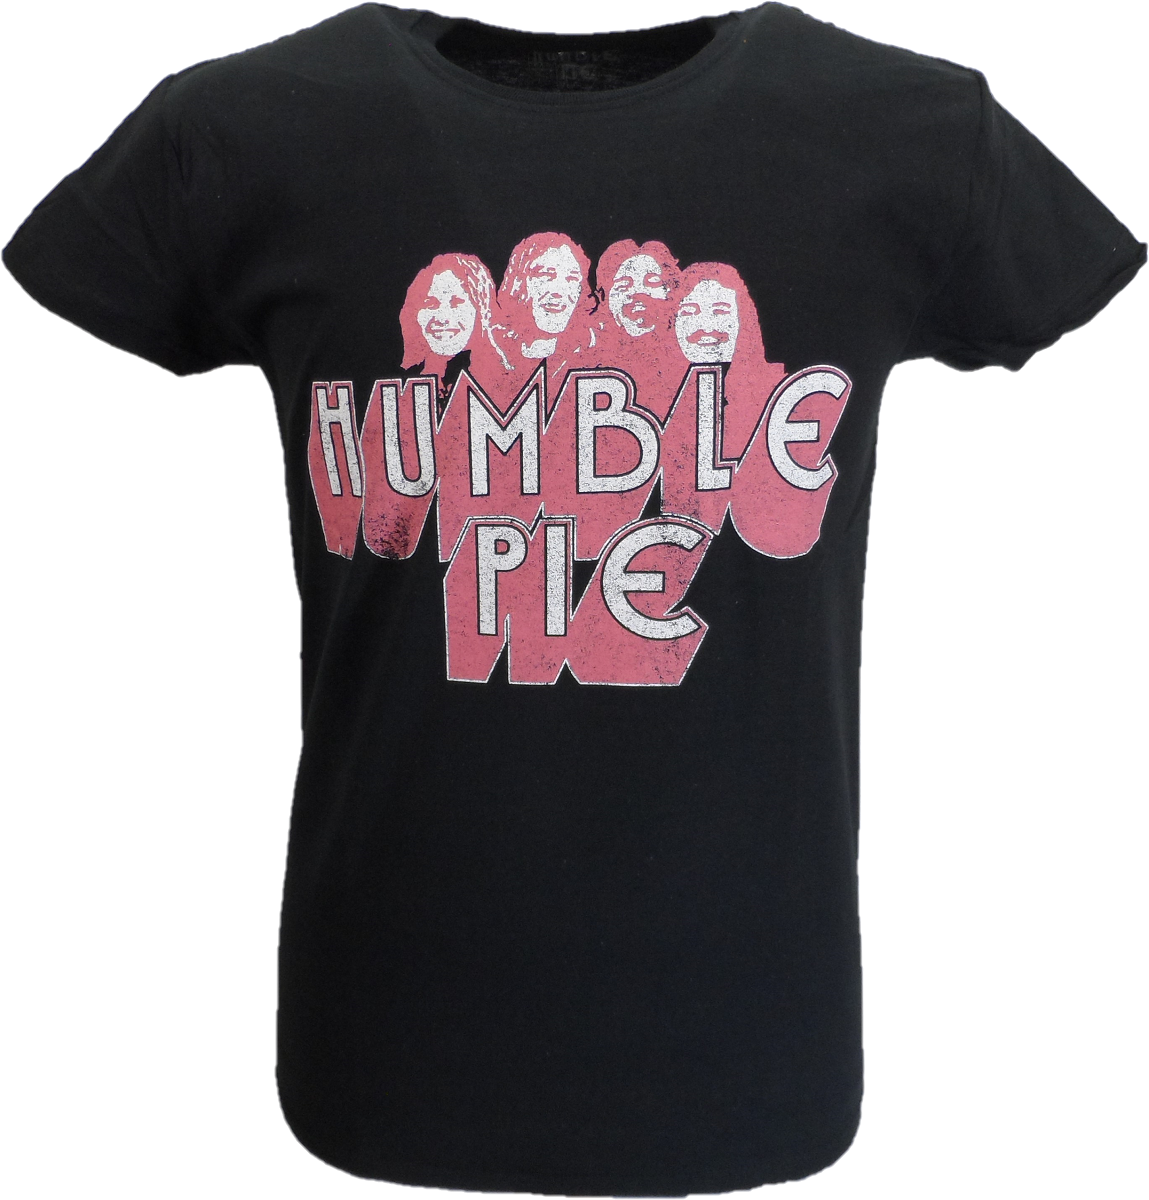 Mens Black Official Humble Pie Live 73 Poster T Shirt